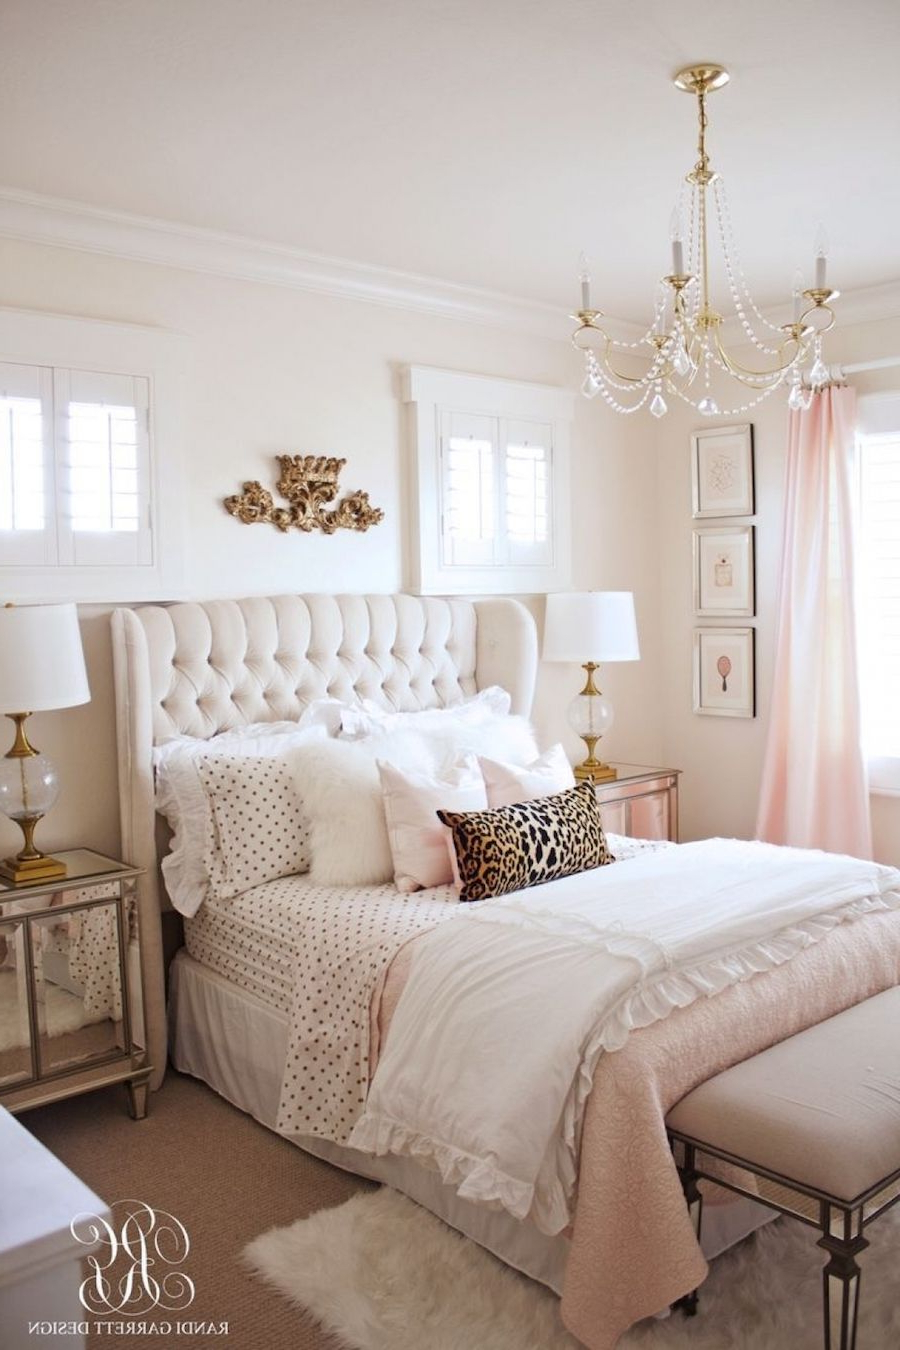 12 Dreamy Decor Ideas For The Bedroom Home Decor Bedroom